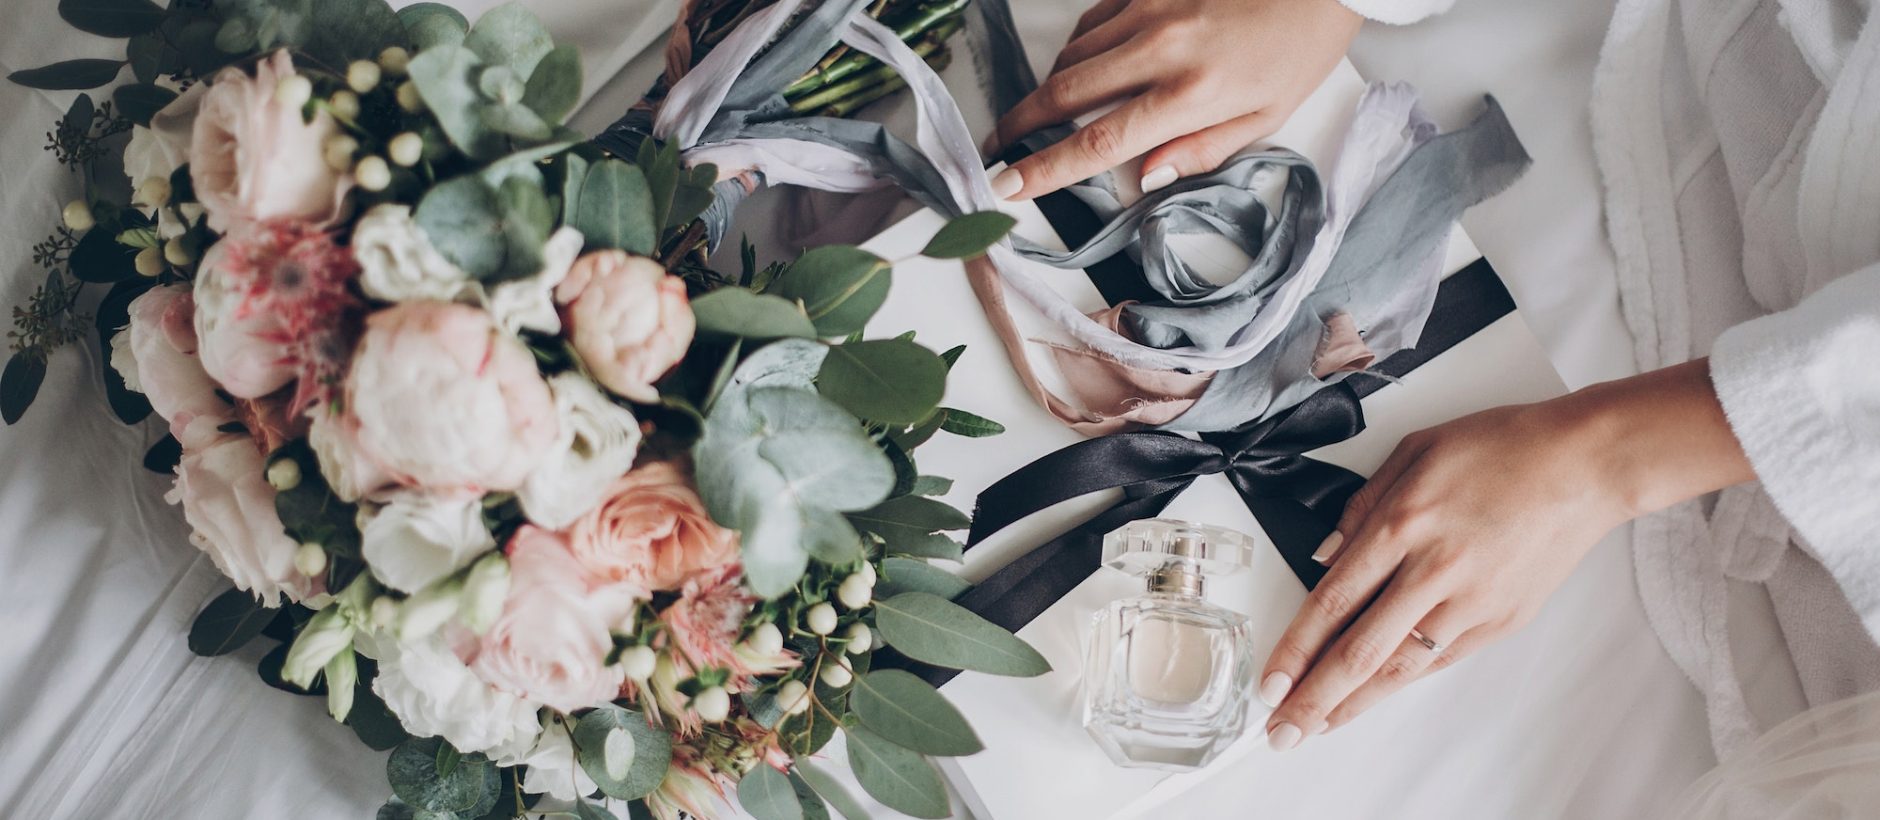 Modern wedding bouquet, perfume bottle, and gift box